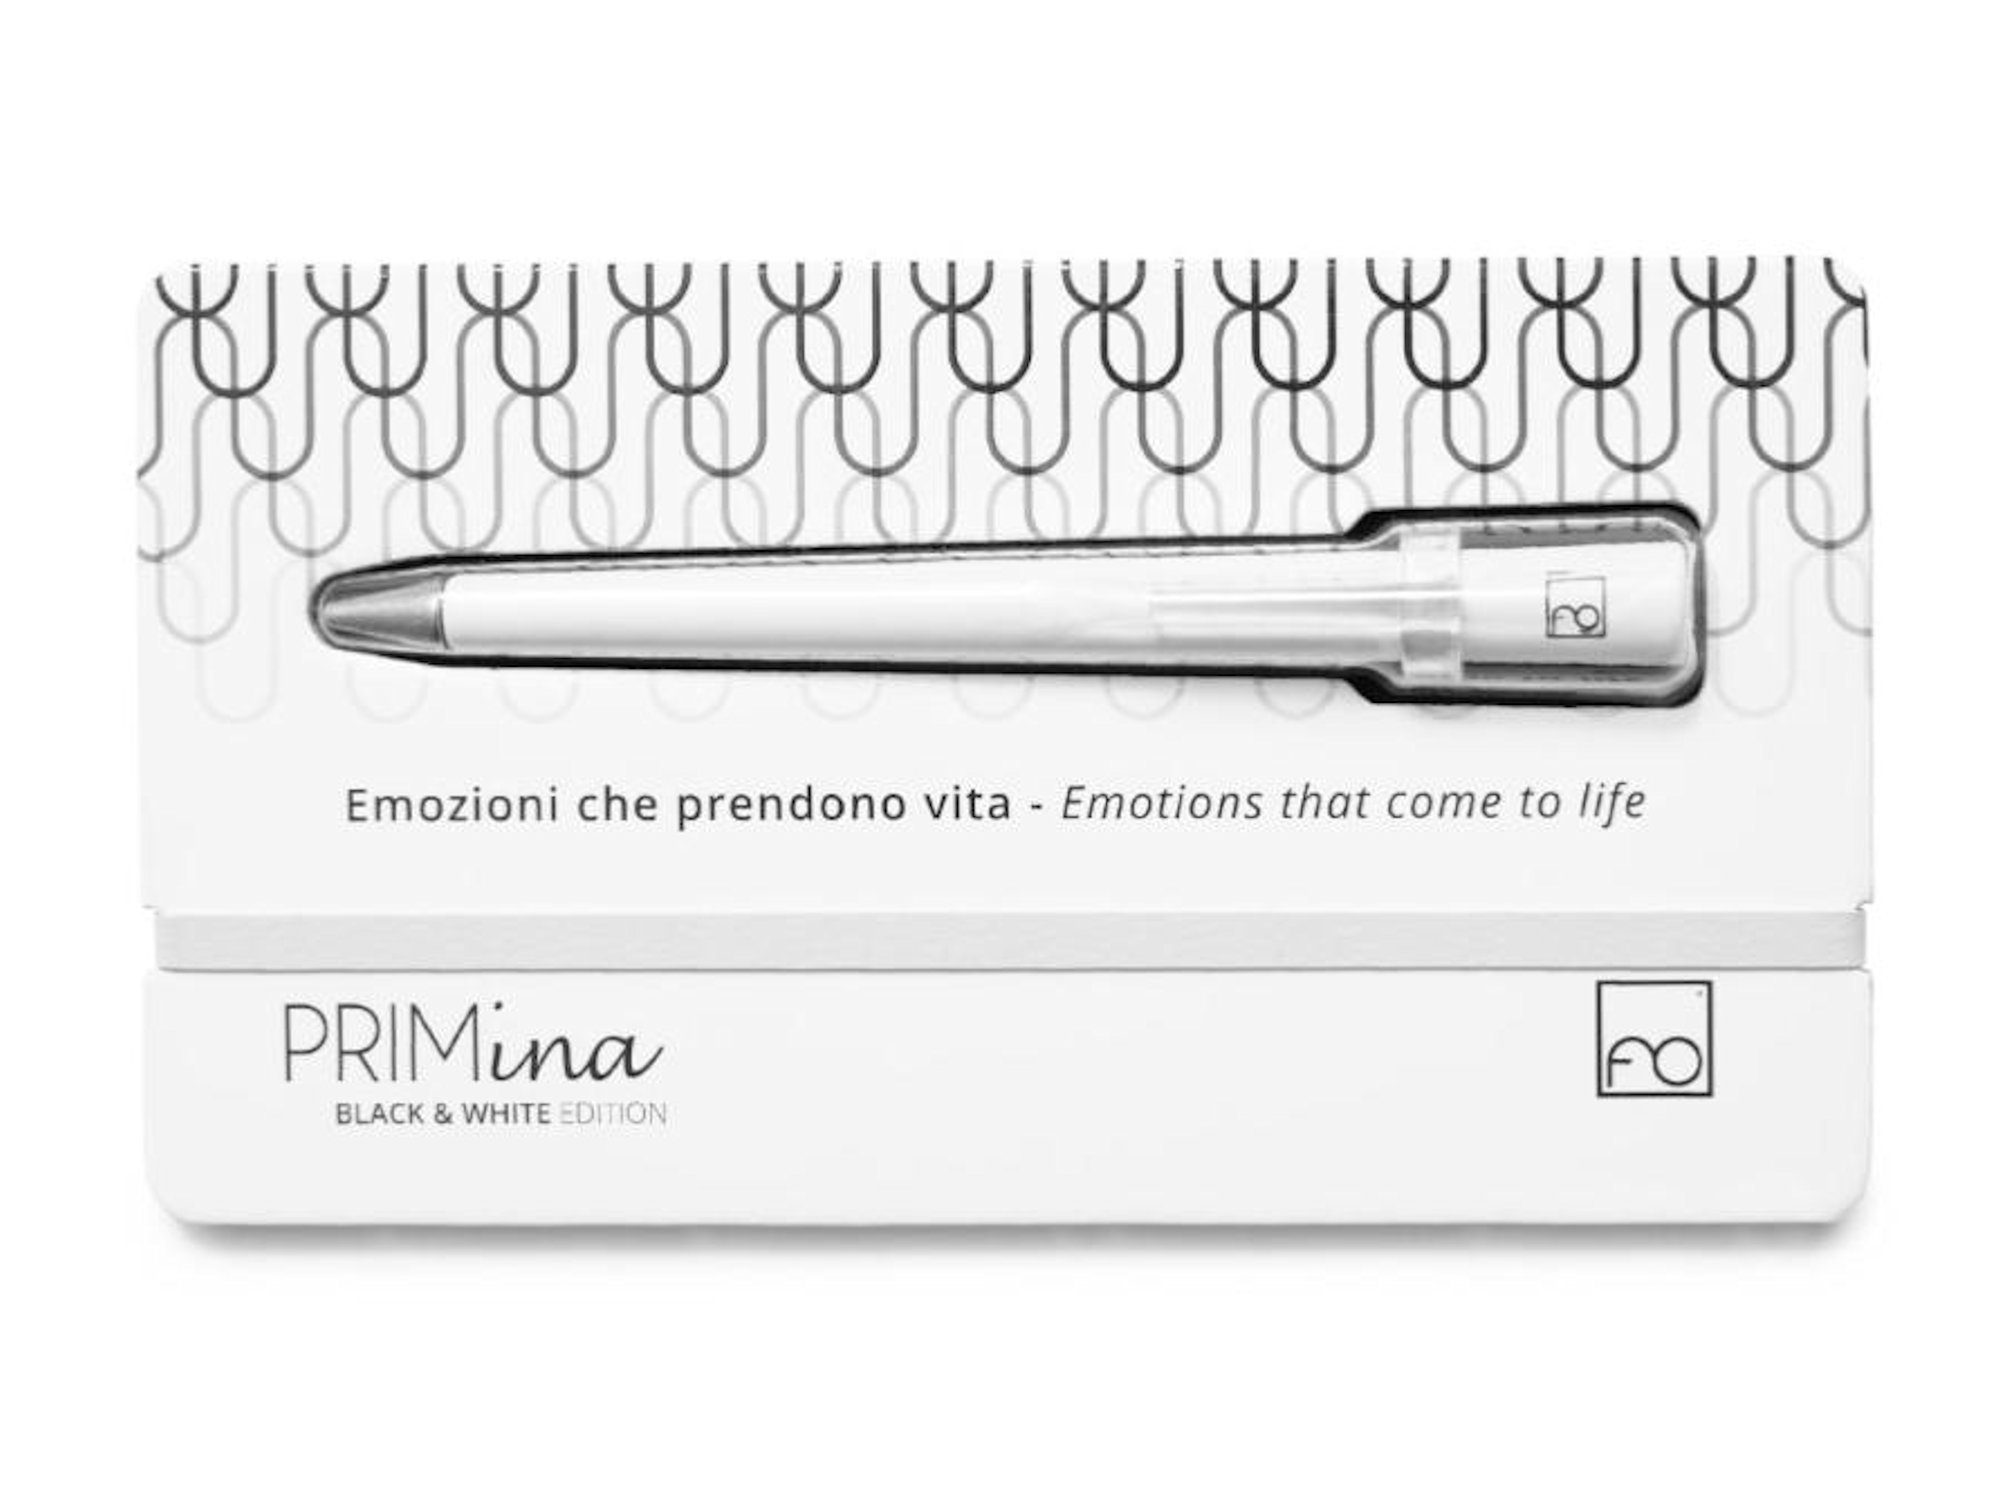 Pininfarina Bleistift Forever Weiß 3, Pininfarina Primina Set) Ethergraf-Spitze Schreibgerät (kein Bleistift